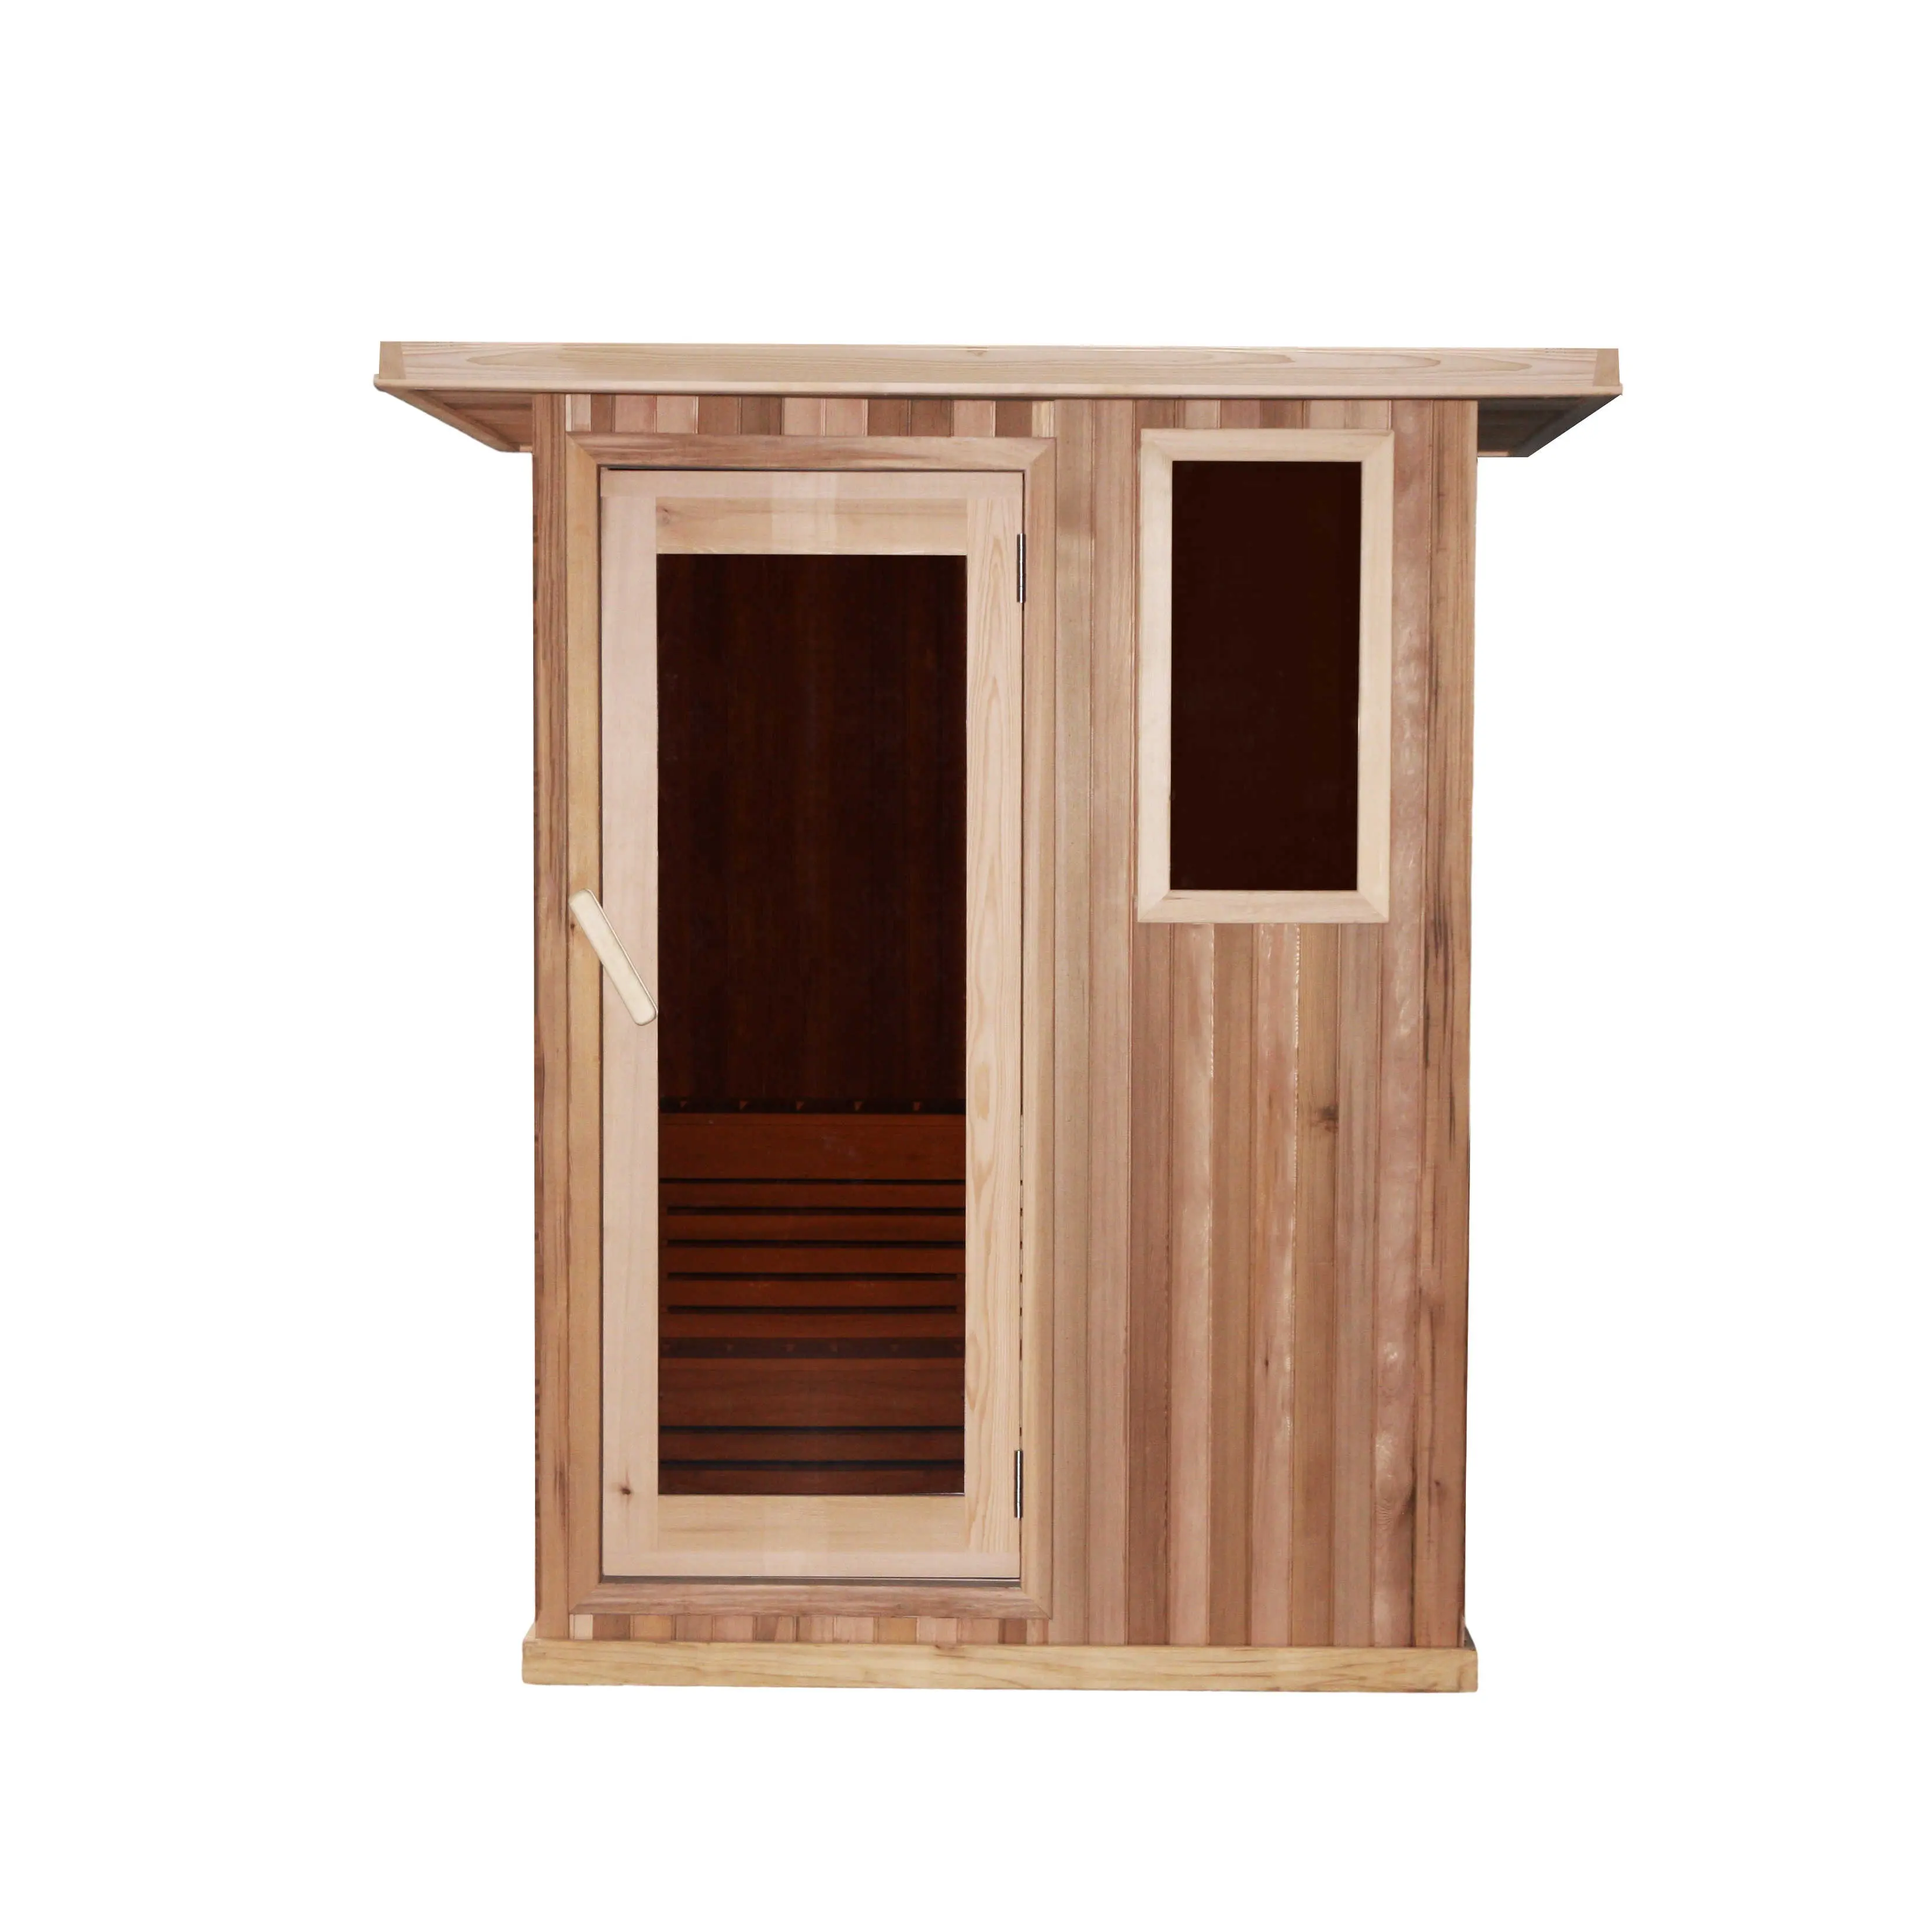 KEYA factory New design Red Cedar/Pine Outdoor Barrel Sauna Room with Better Thermal Insulation Effect for Steam Sauna